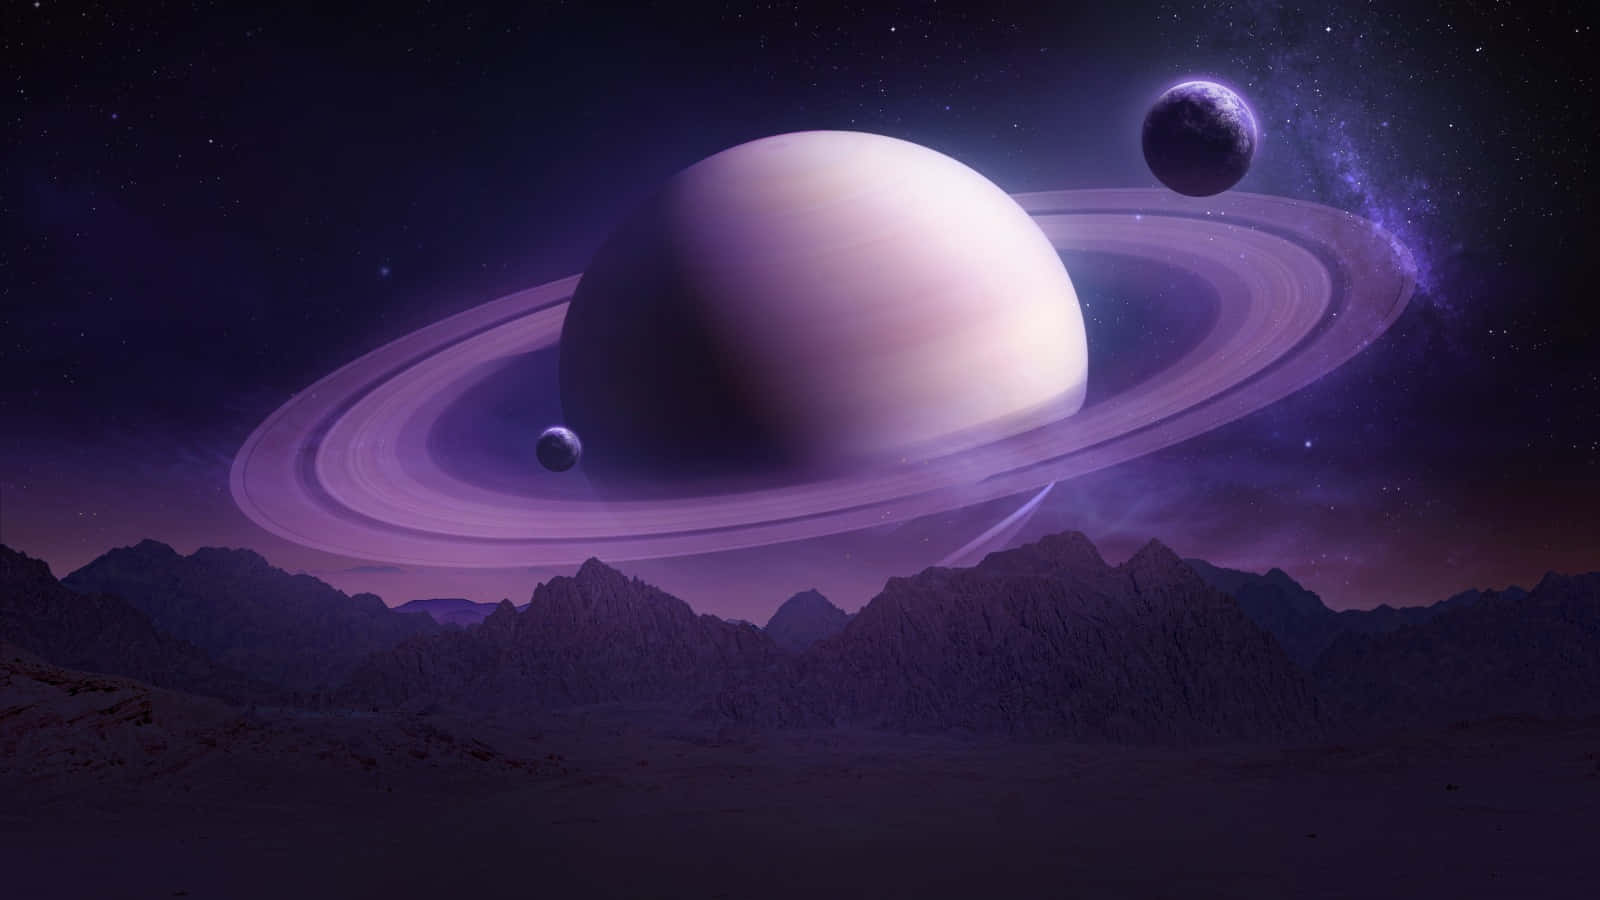 Saturn in all its Beautiful Glory